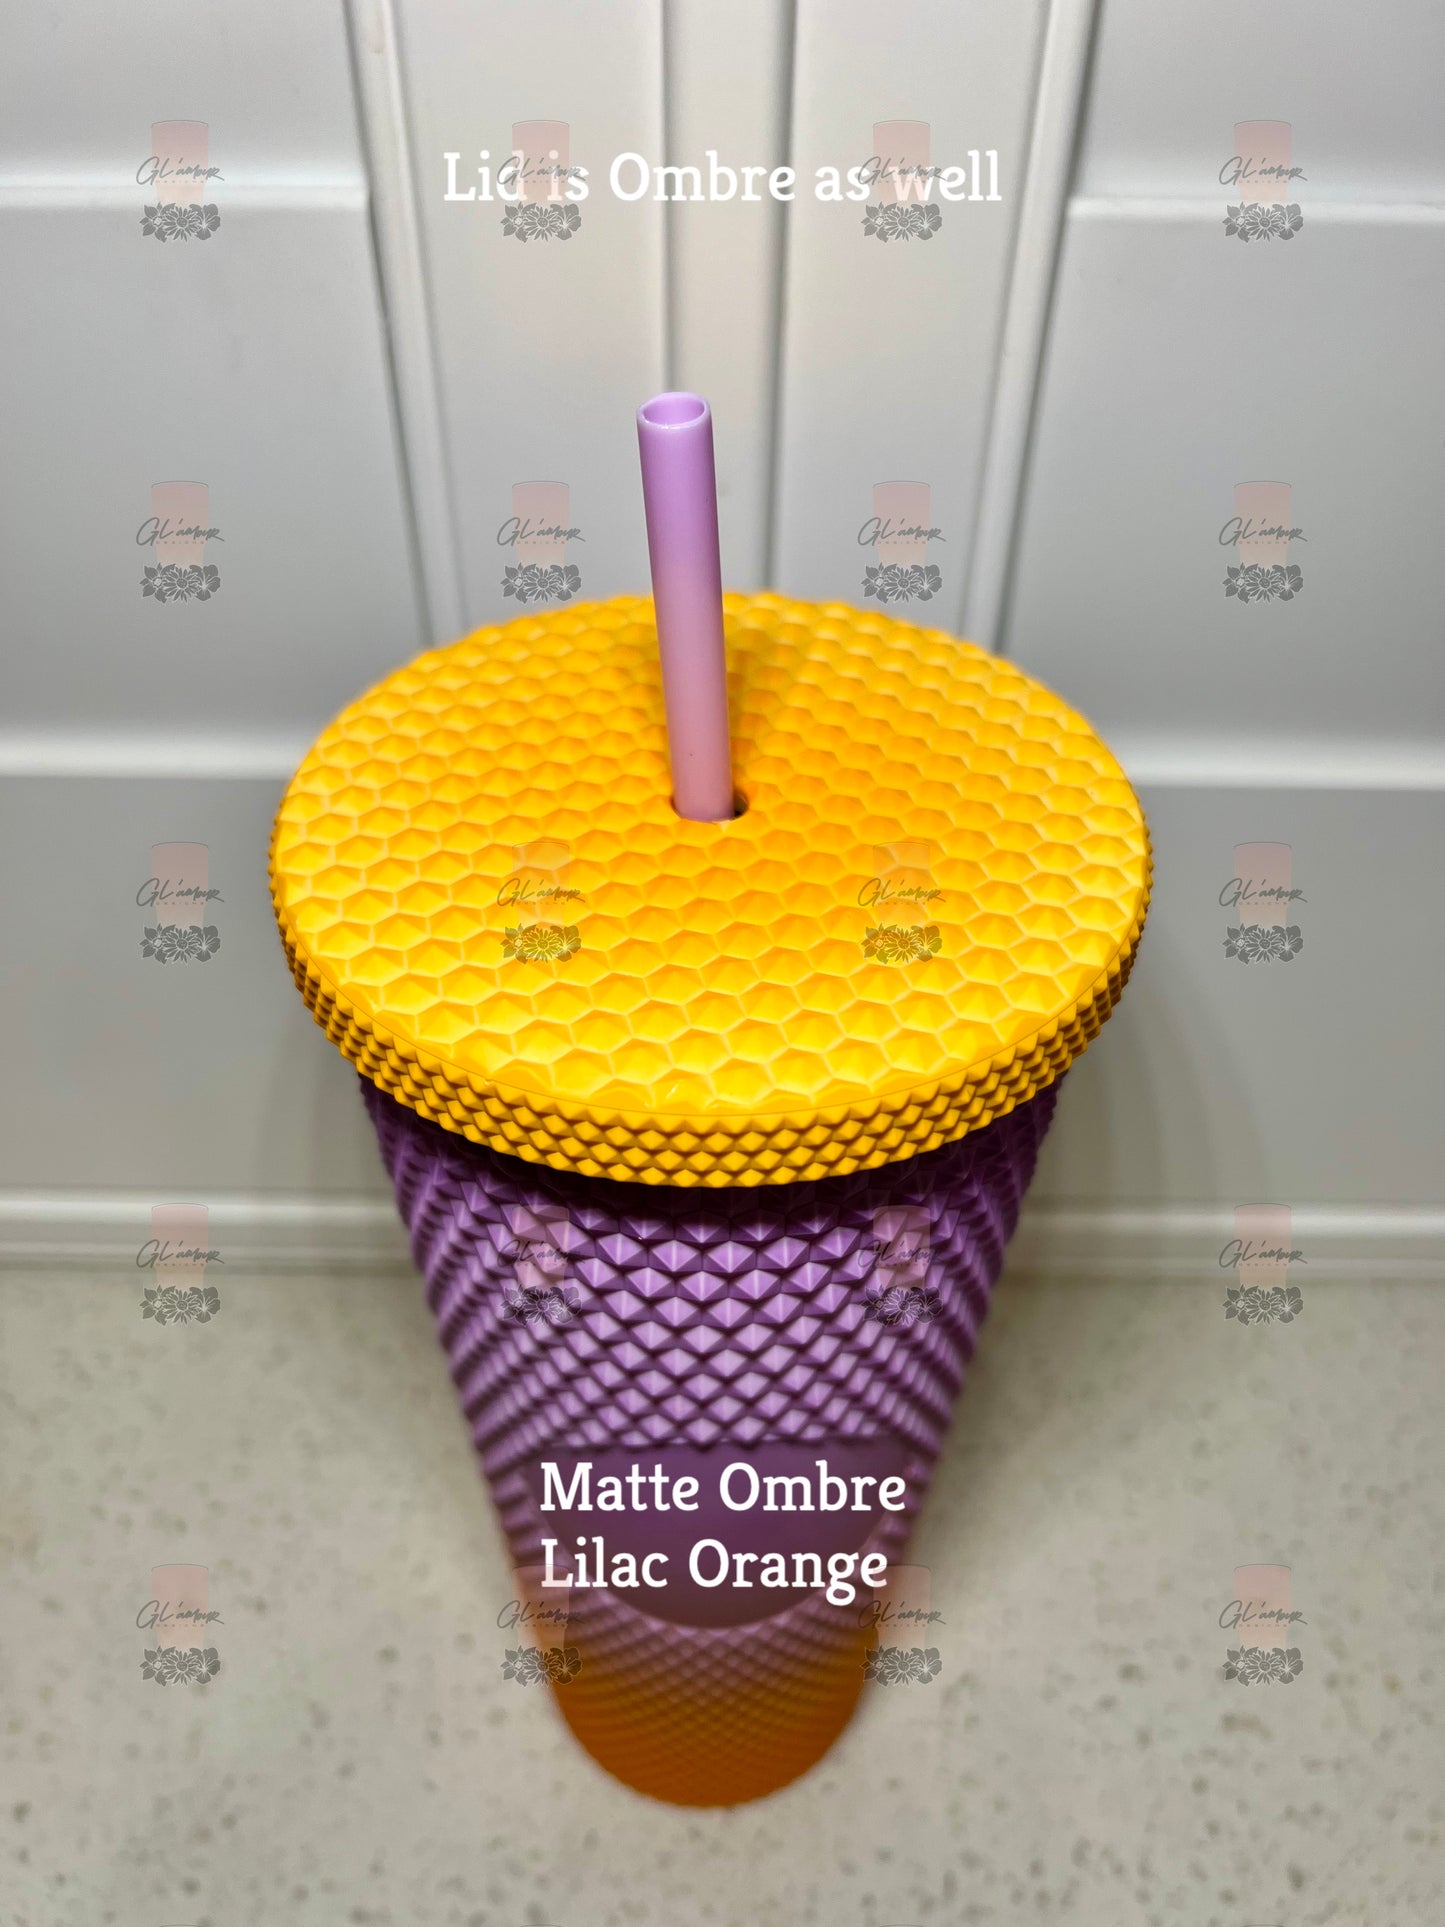 Matte Ombre Lilac/ Orange 24 oz